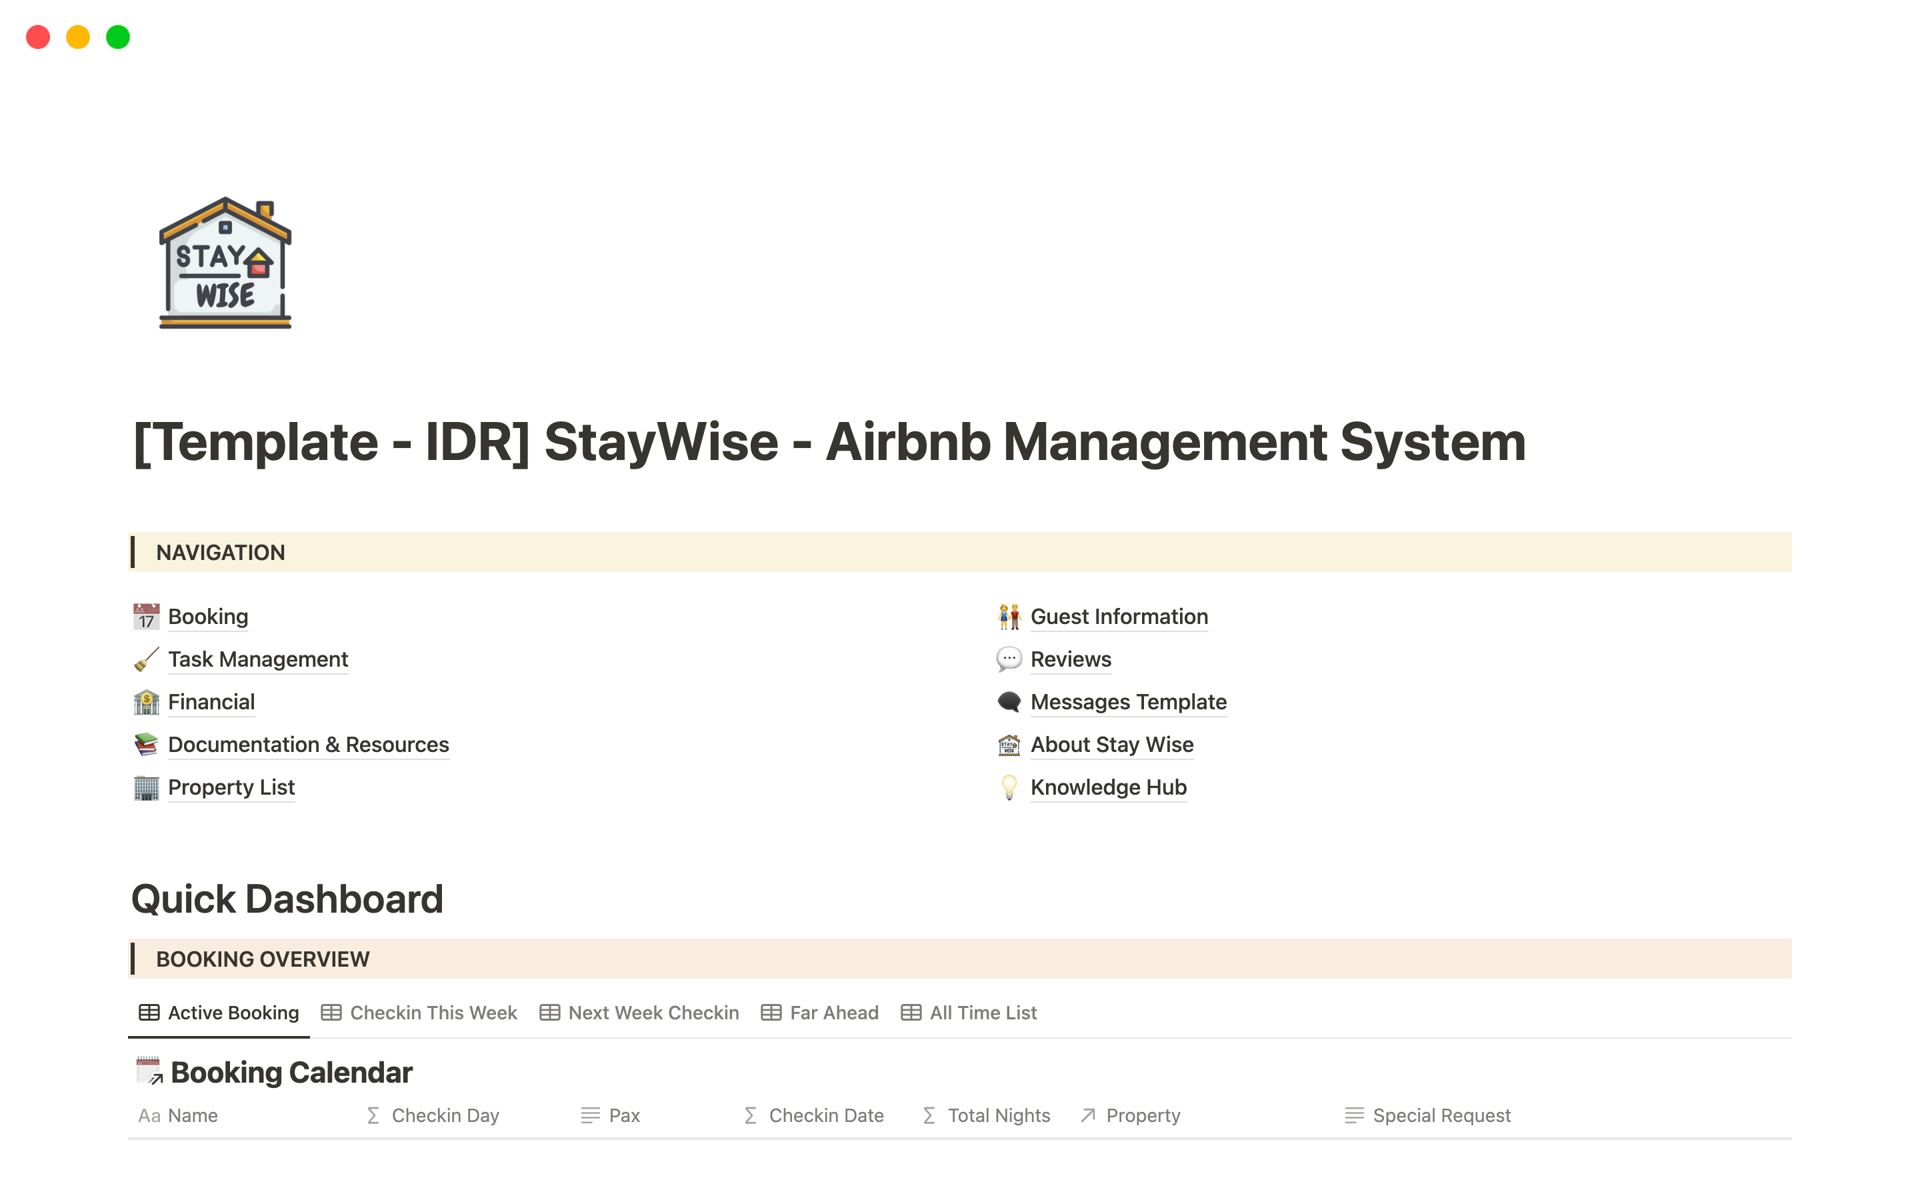 Vista previa de plantilla para StayWise IDR - Airbnb Management System